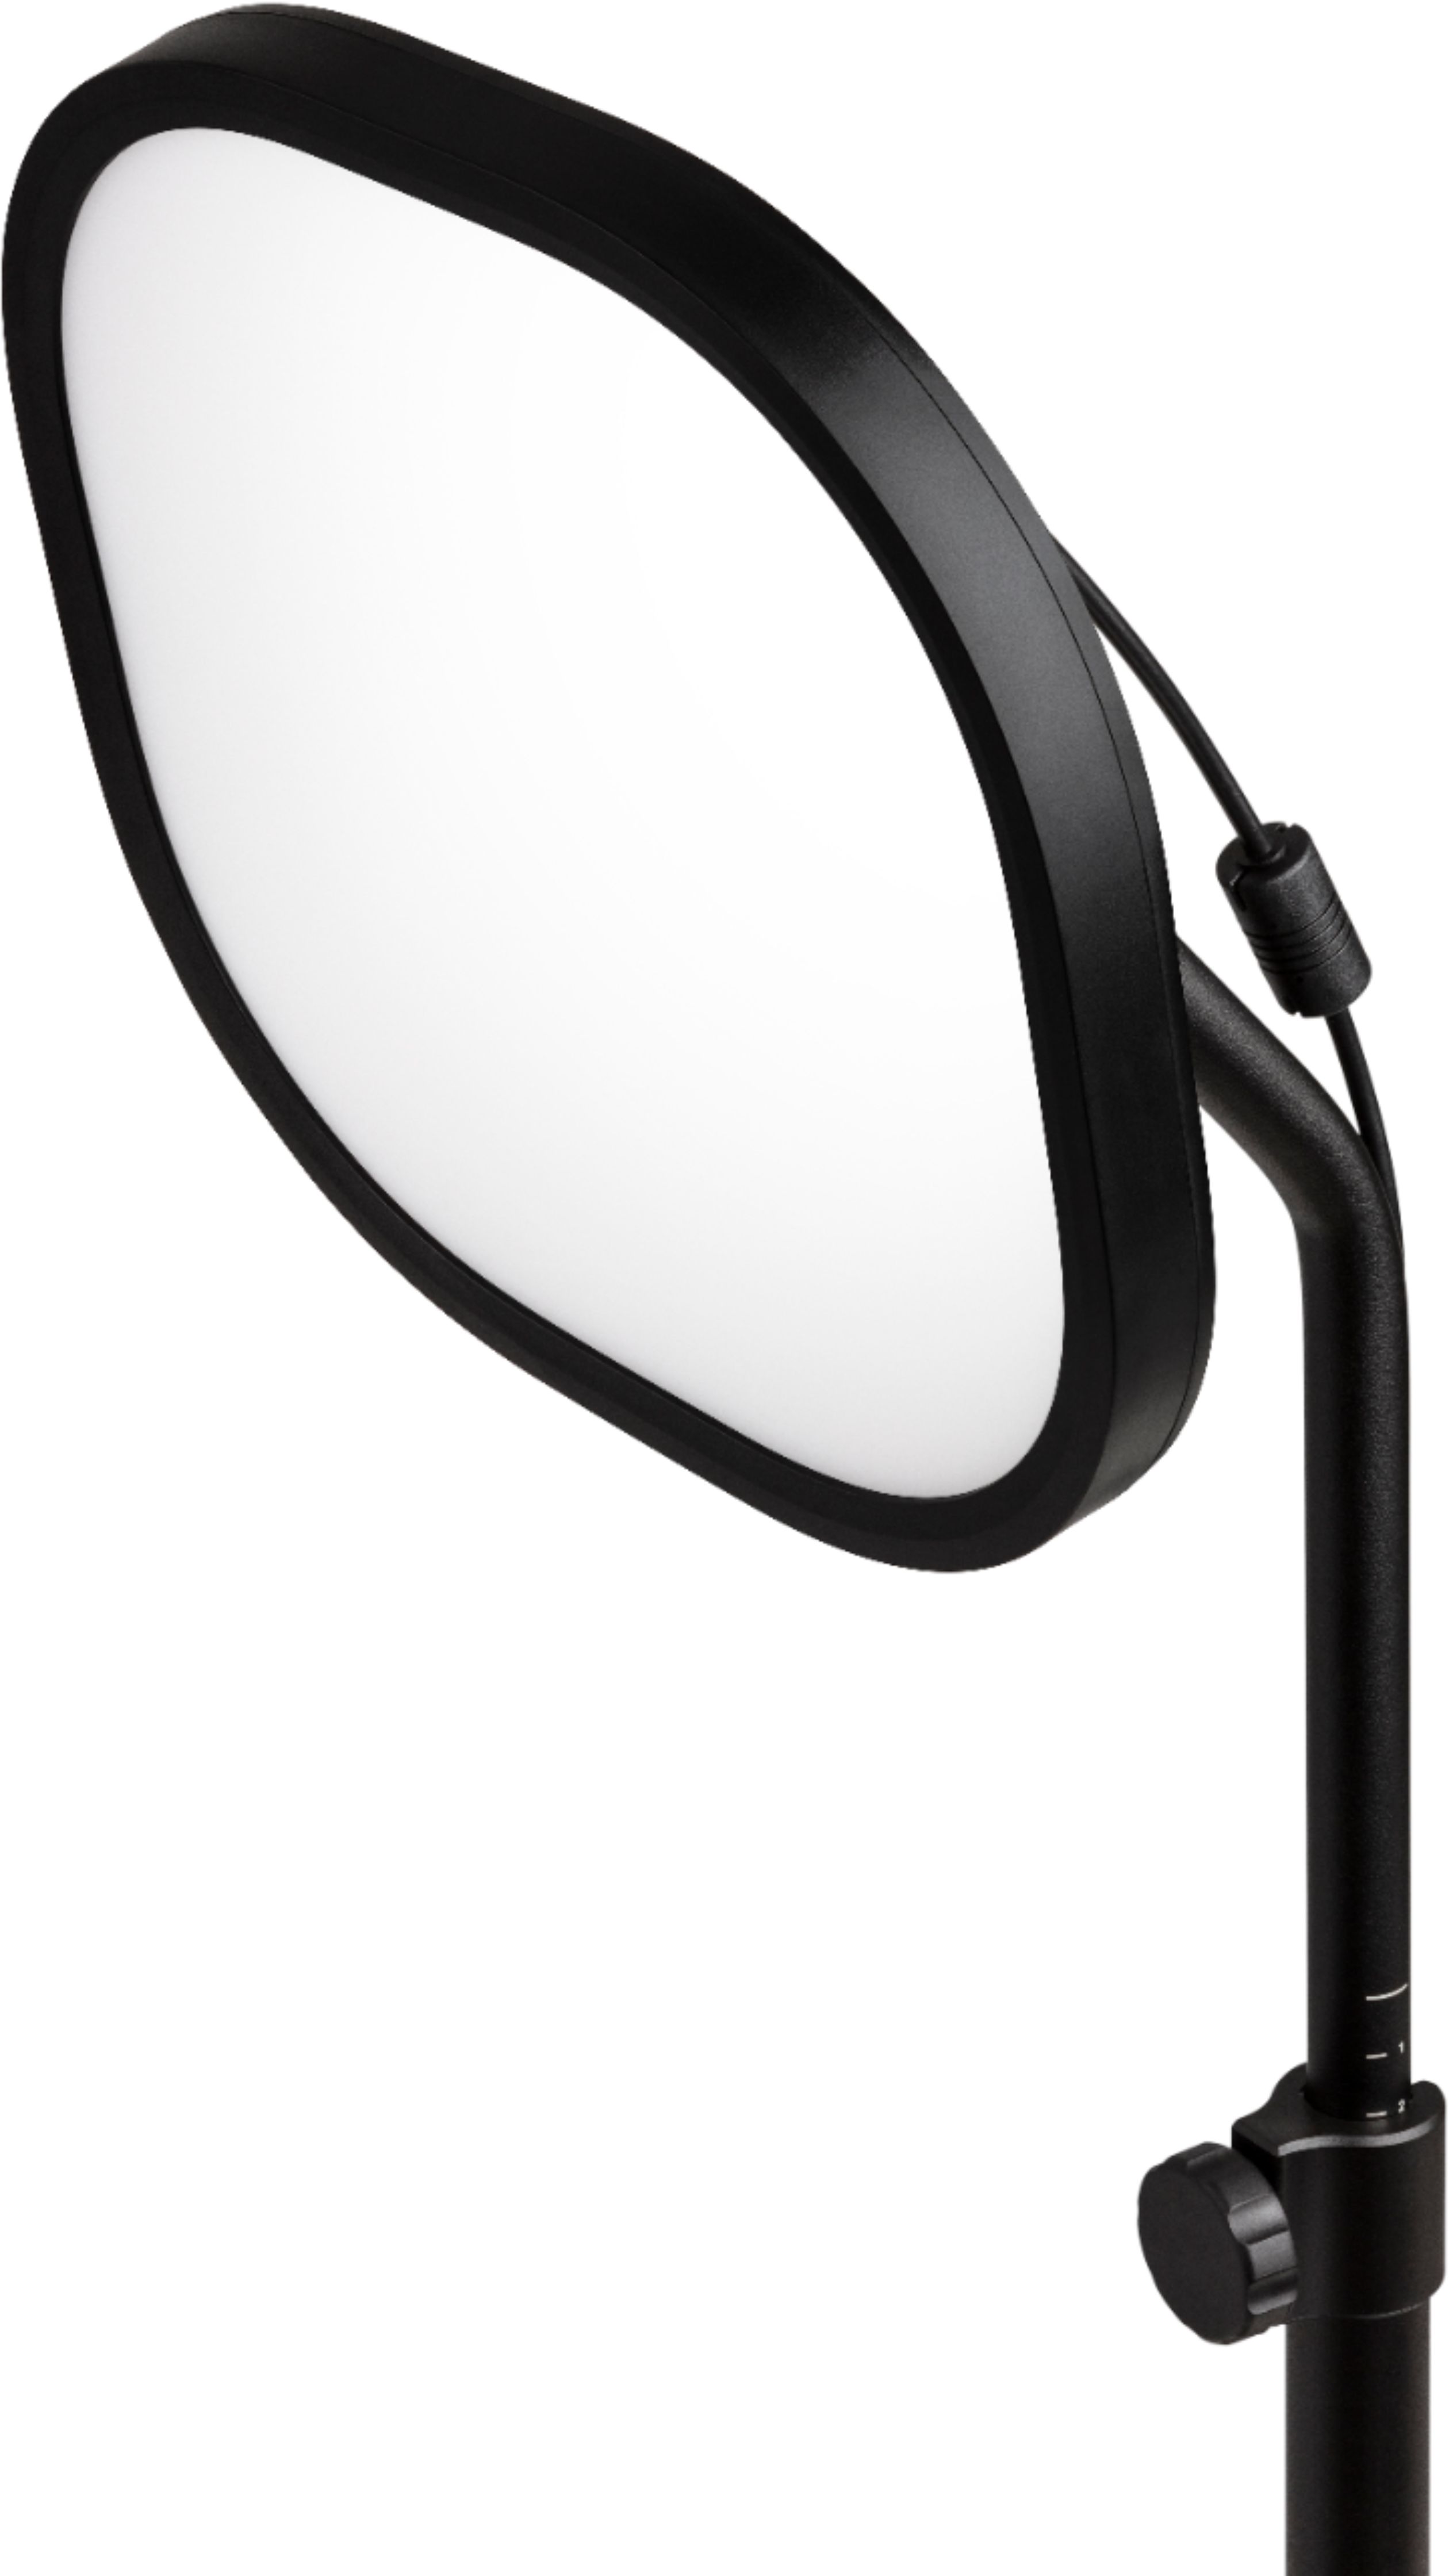 Elgato Key Light Air LED Panel Black 10LAB9901 - Best Buy